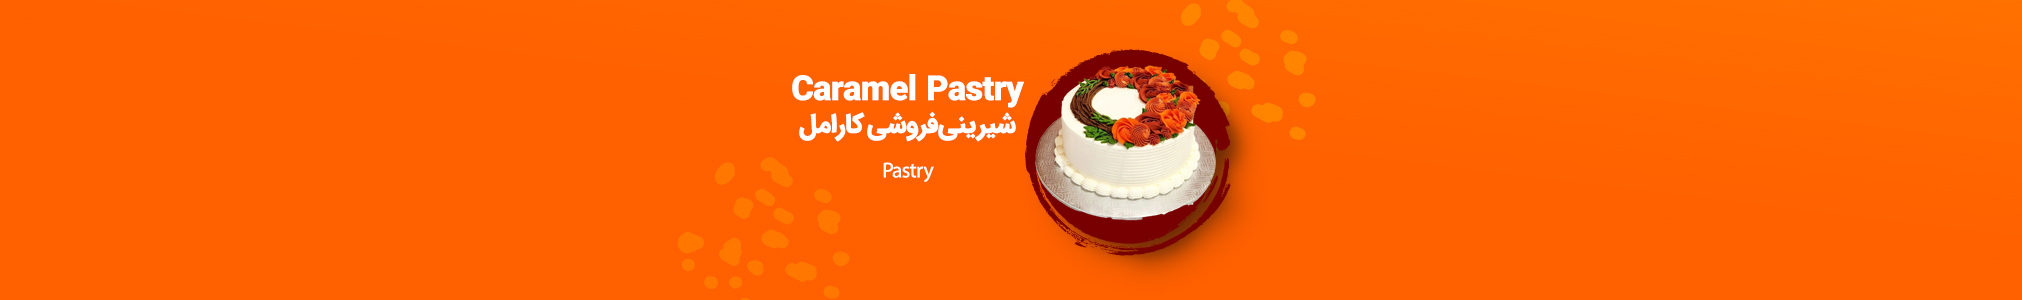 Caramel Pastry